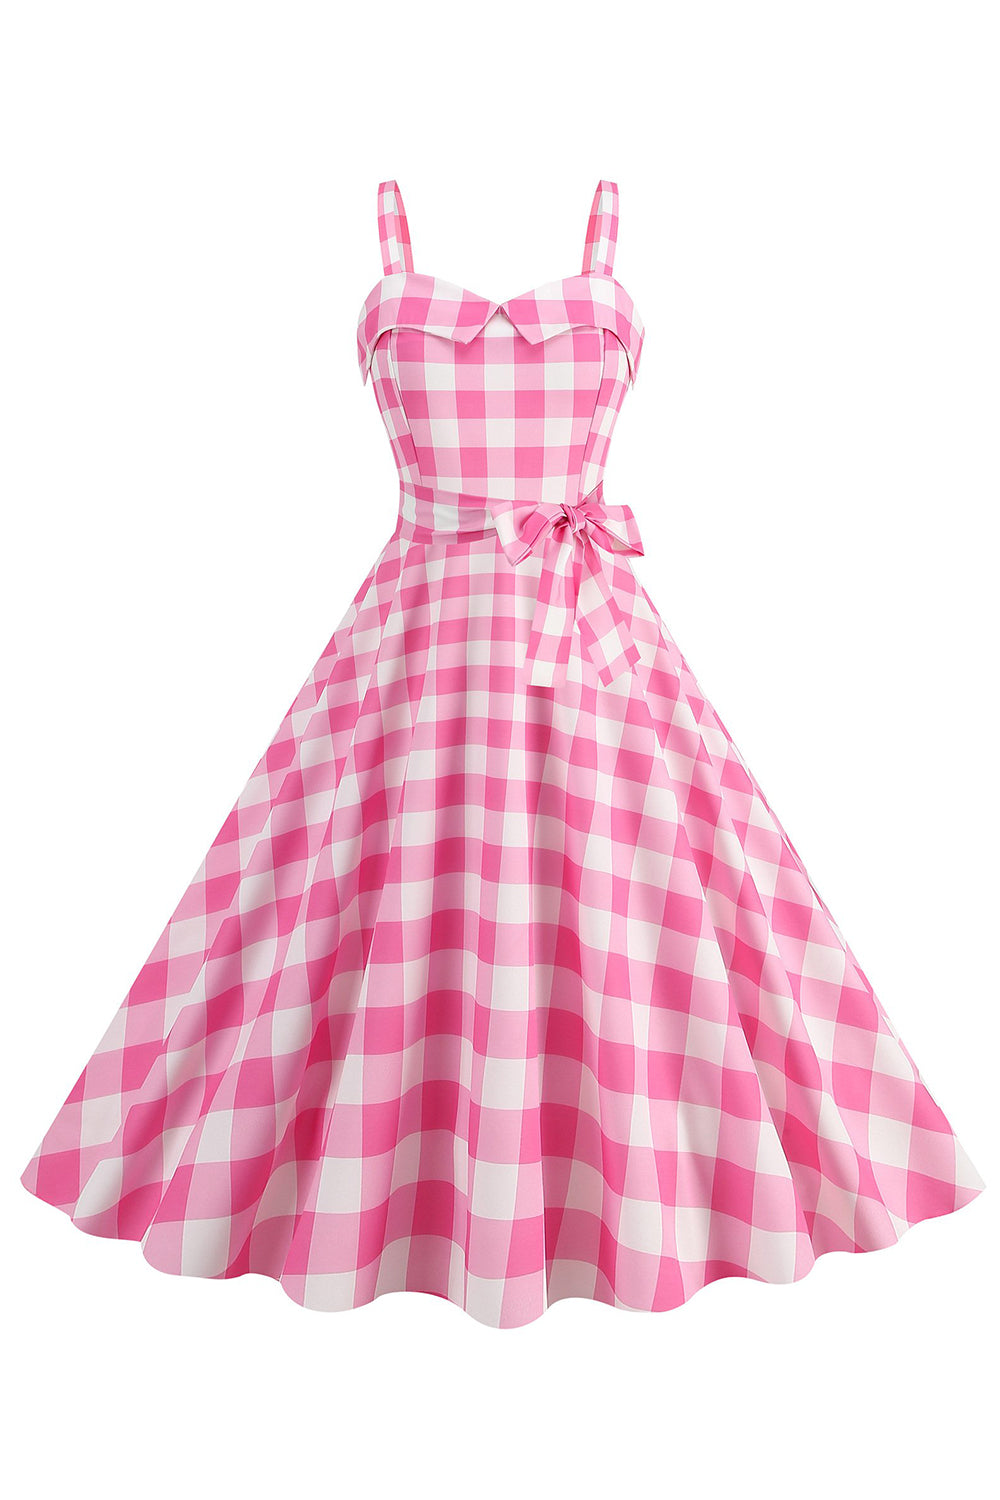 Plaid Pink Spaghetti Straps A Line 1950s Dress